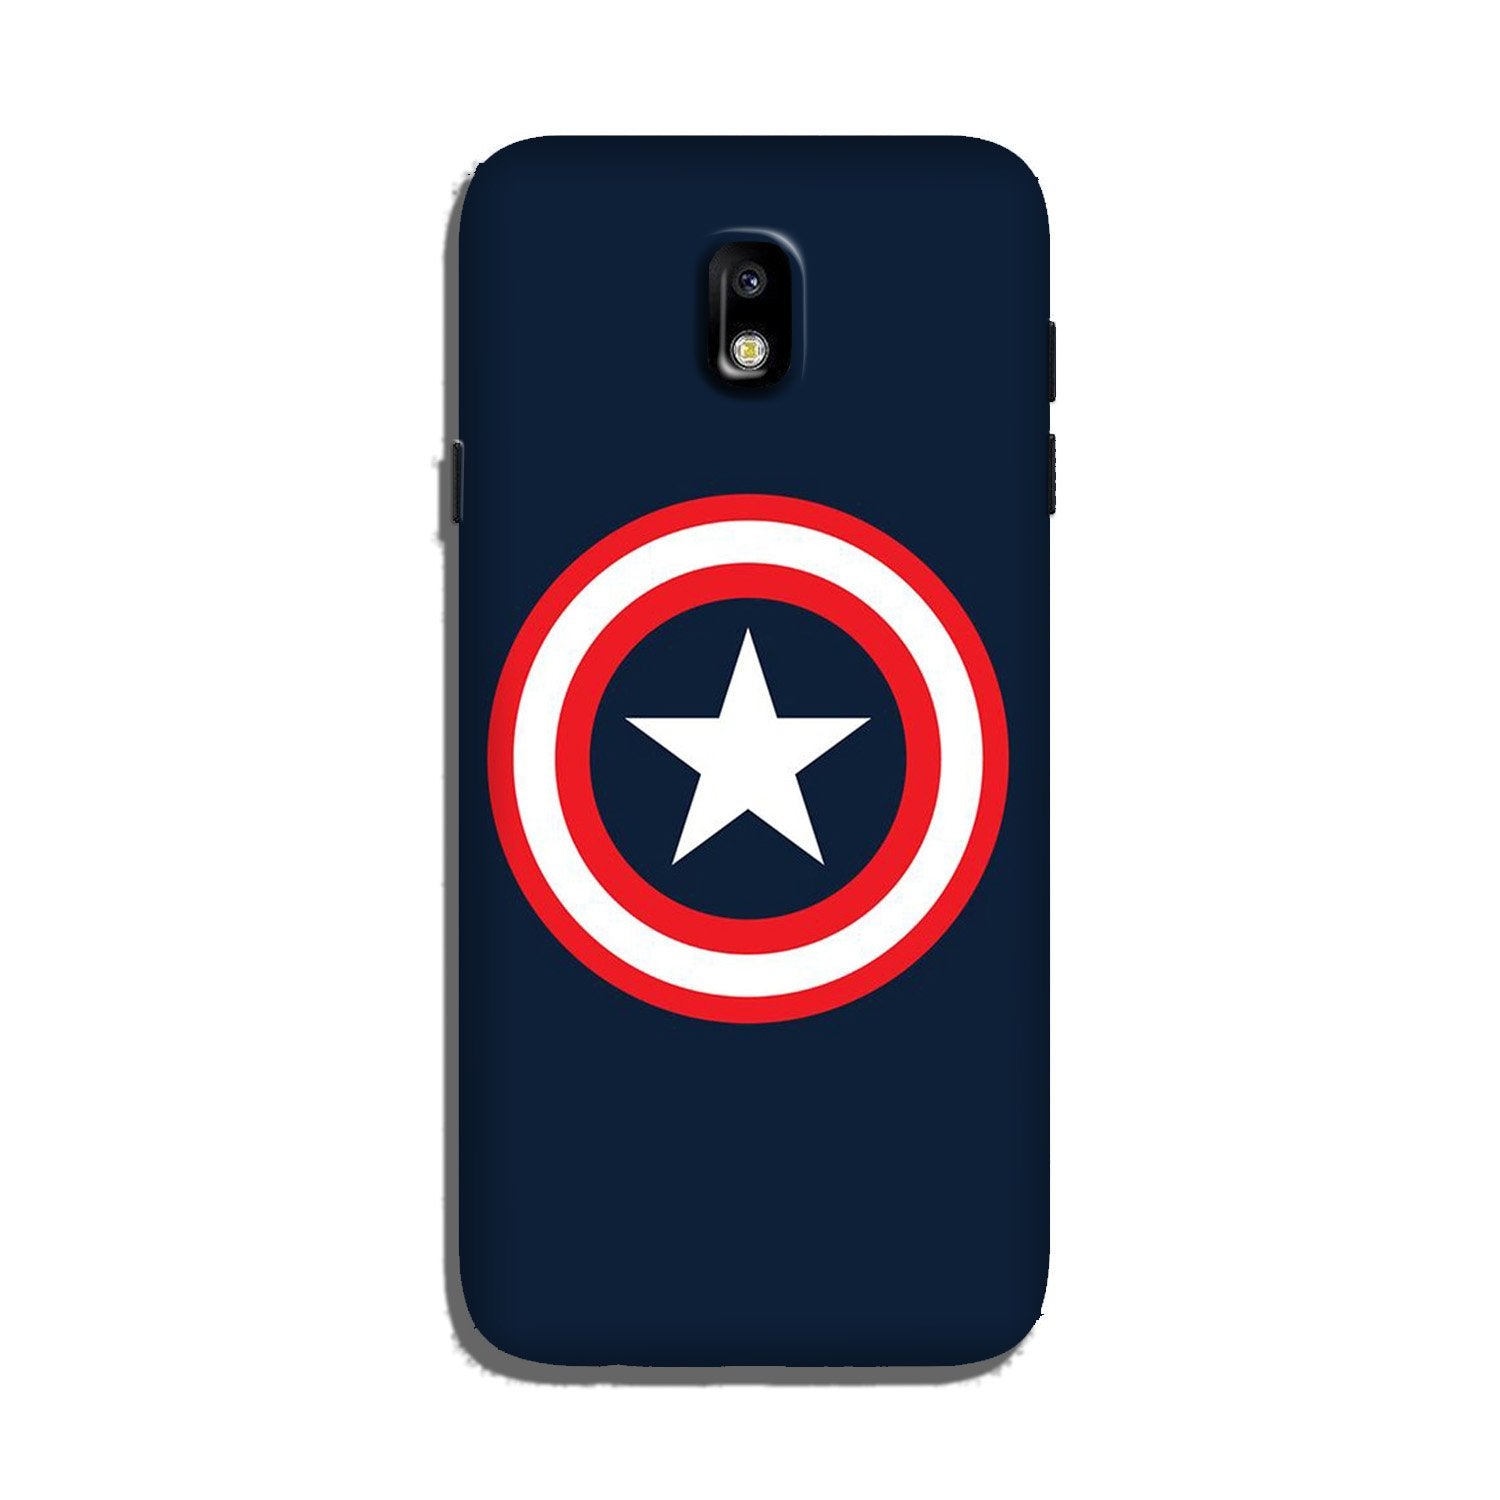 Captain America Case for Galaxy J5 Pro